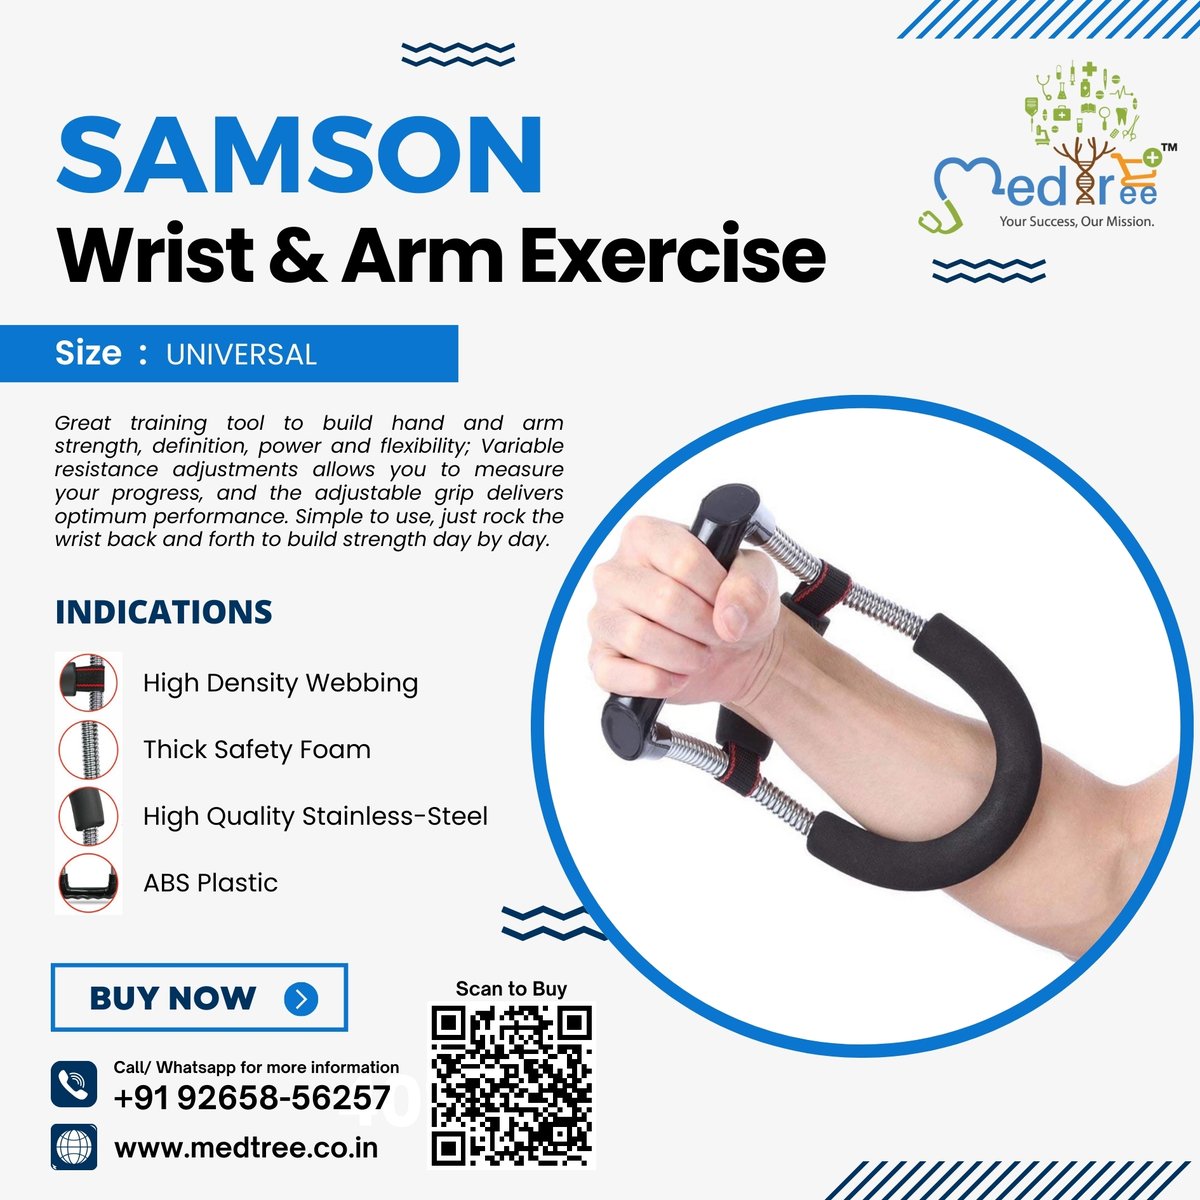 Samson Wrist & Arm Exercise
 
Buy Now: medtree.co.in/product/wrist-…

#wristexercises #wristexercise #armexercises #armexercise #armsupport #wristsupport #musclebuilding #exercise #gym #workout #healthcare #Orthopedics #OrthopedicProducts #orthocare #medtreeindia #samson #MedTree